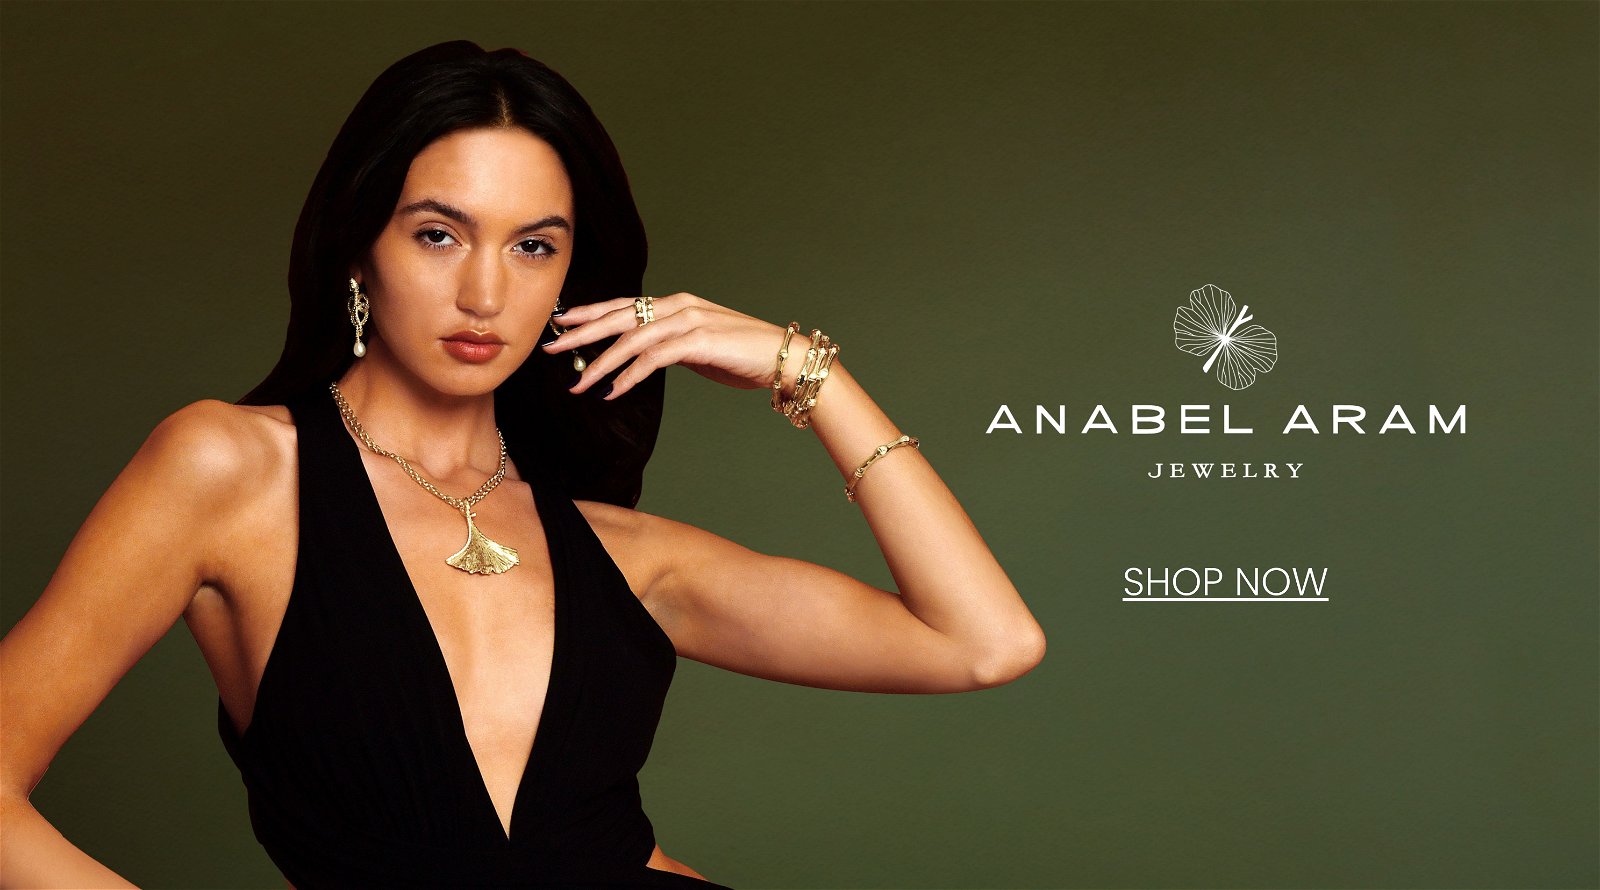 Introducing Anabel Aram Jewelry